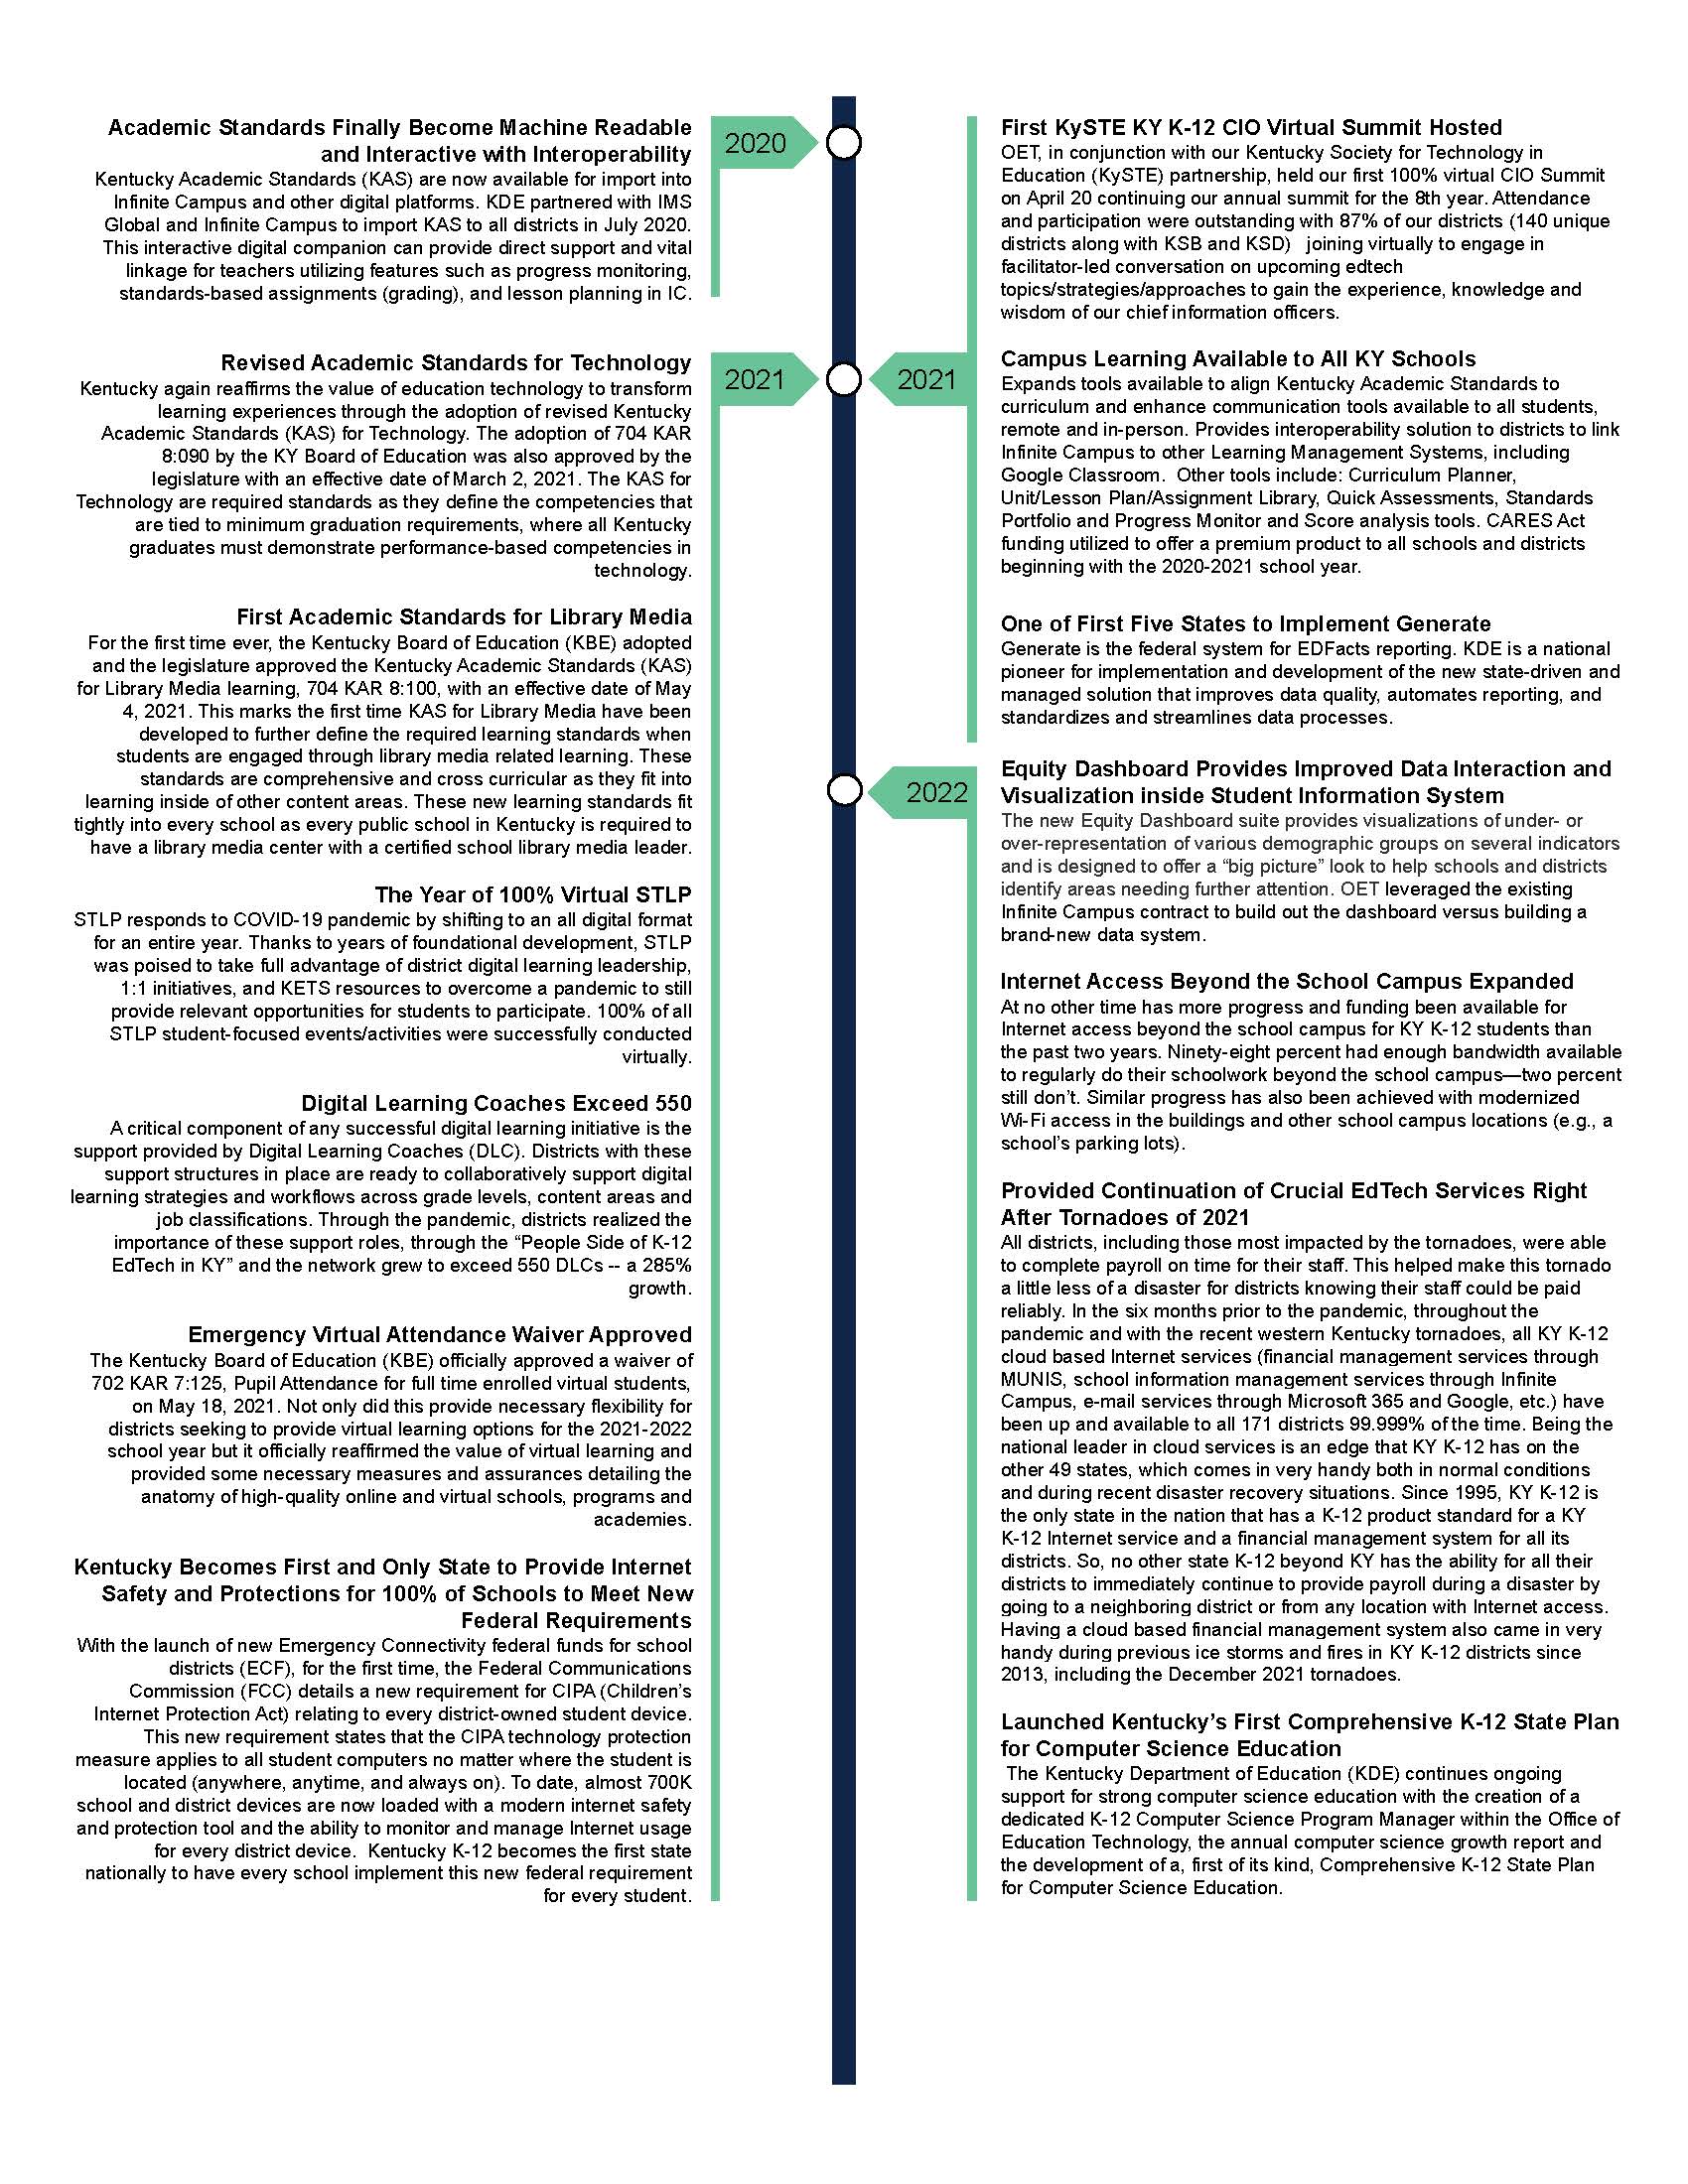 KETS Timeline_2022 (1)_Page_5.jpg